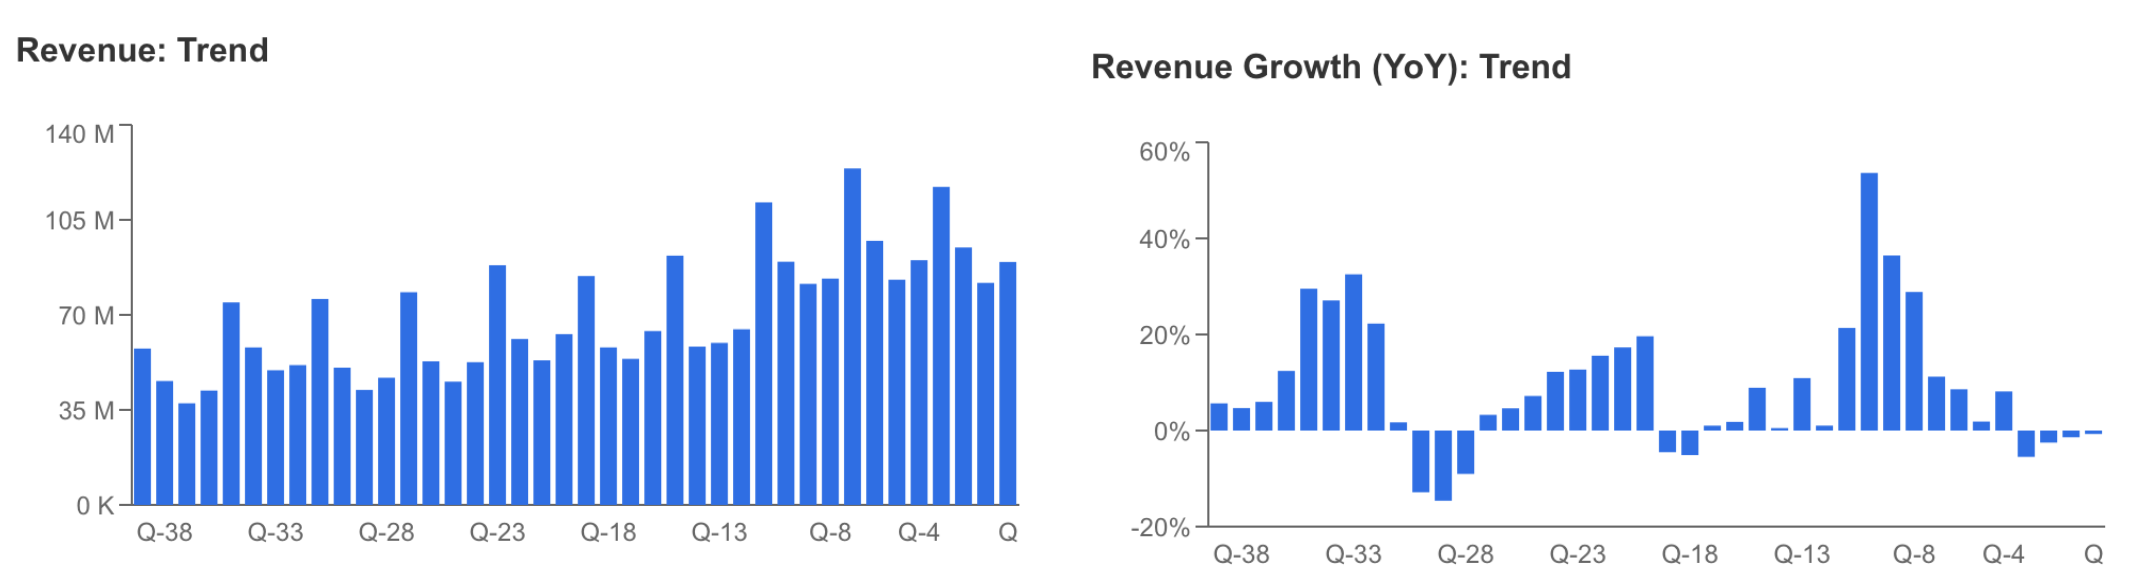 Revenue and Revenue Growth Trend